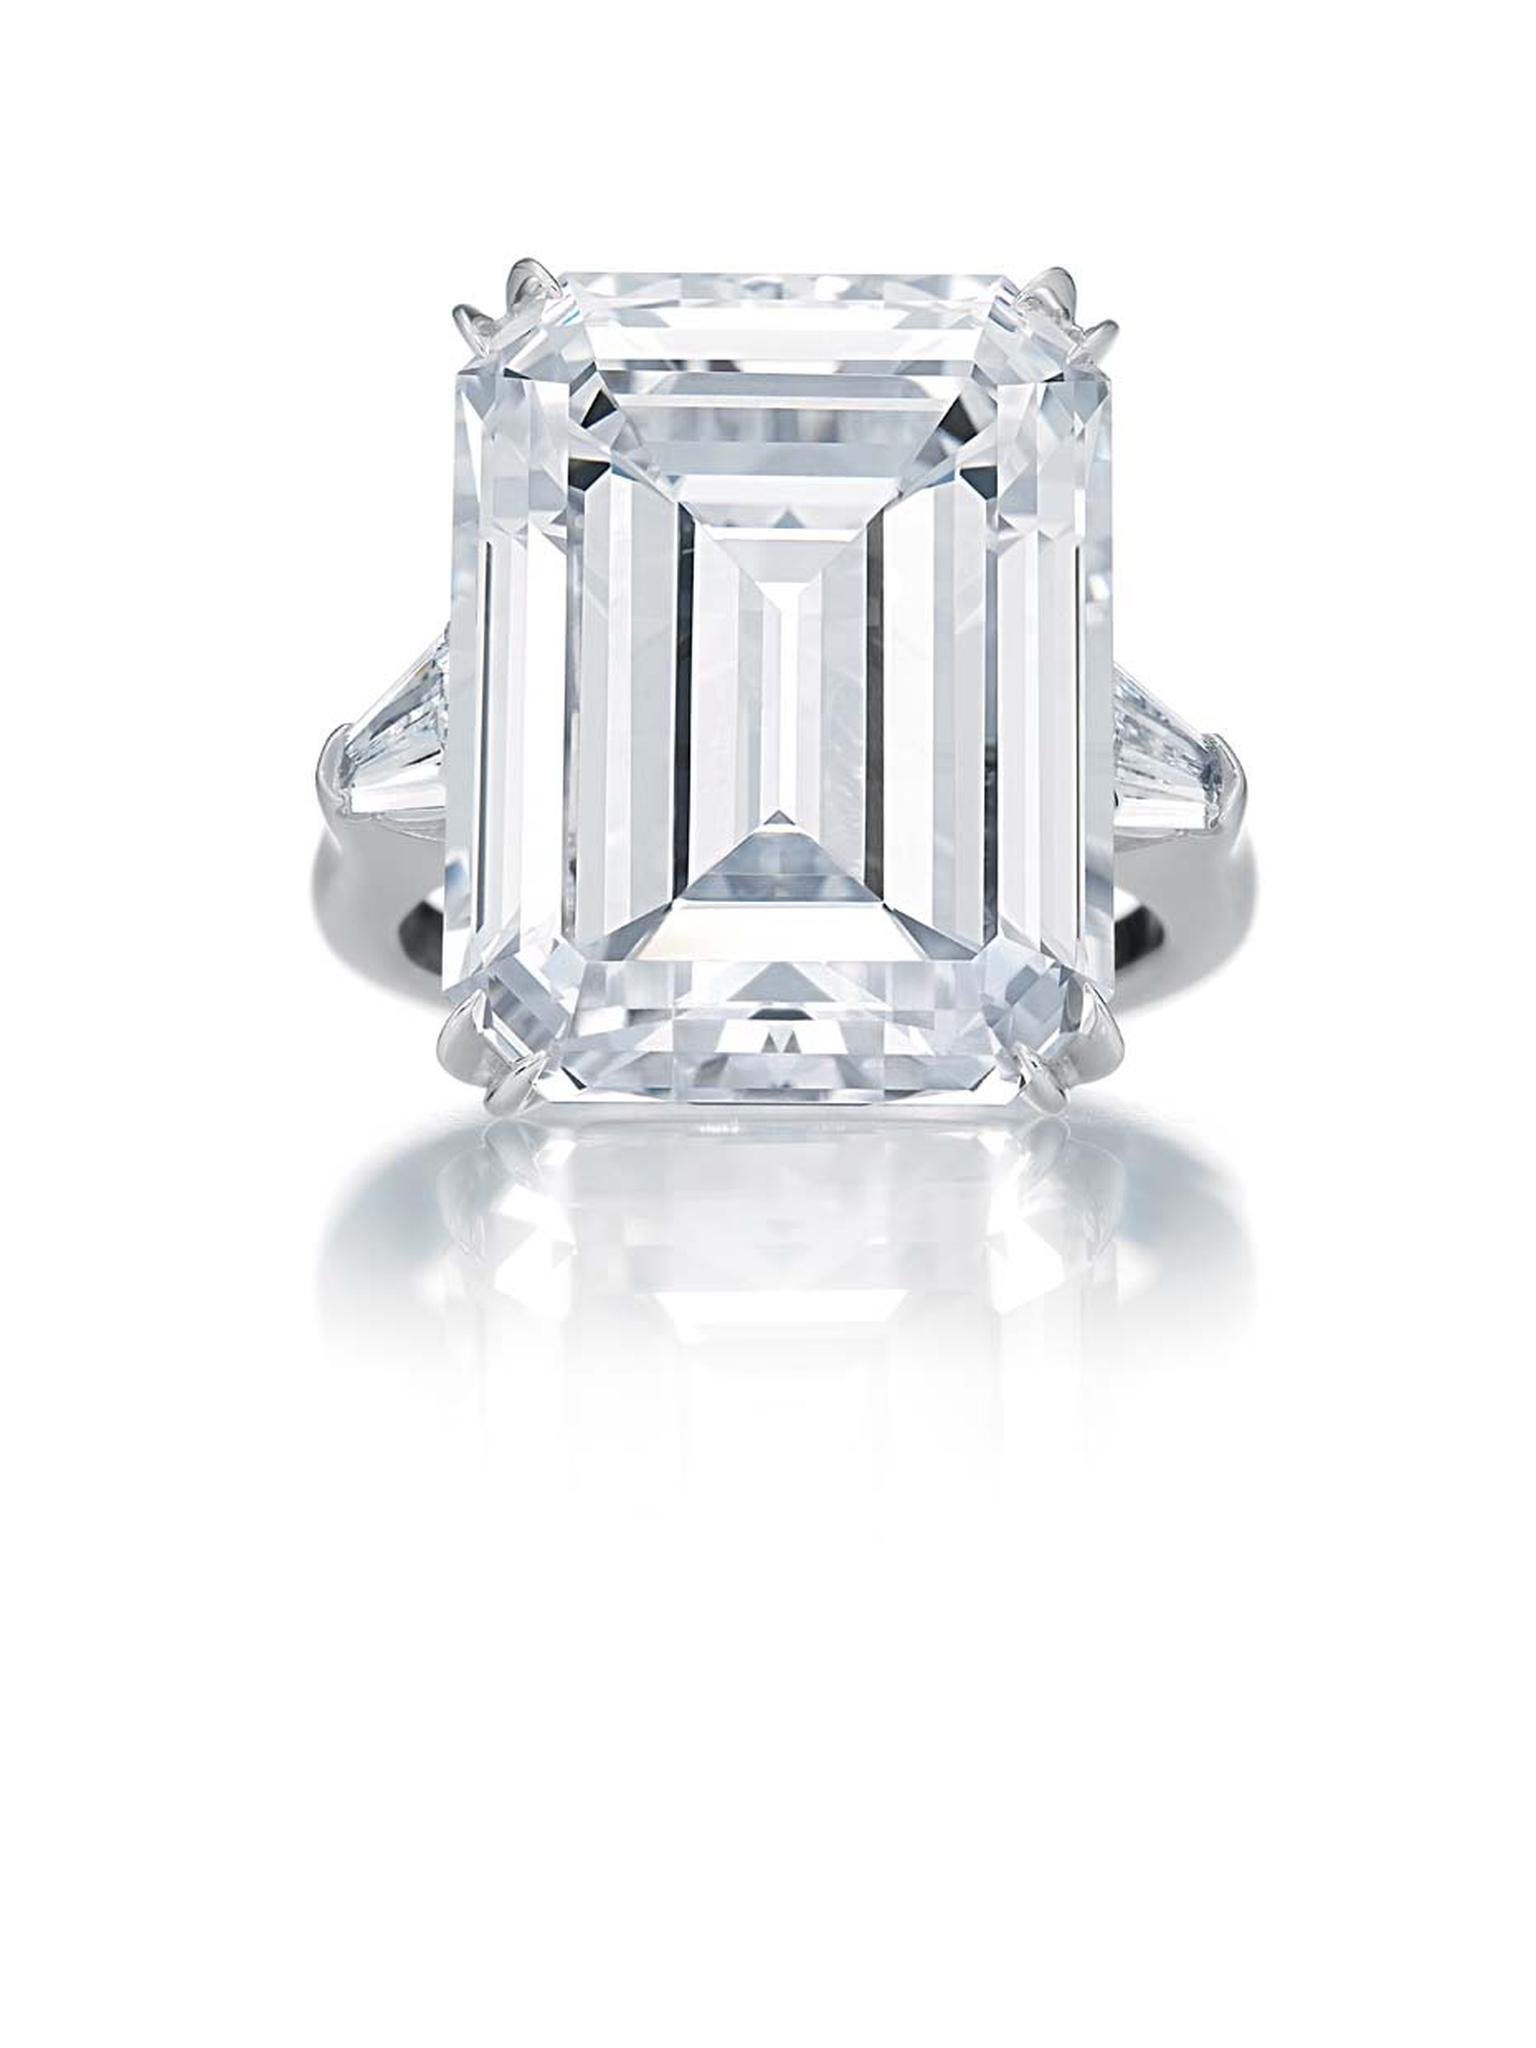 Harry Winston Classic Winston emerald cut diamond engagement ring